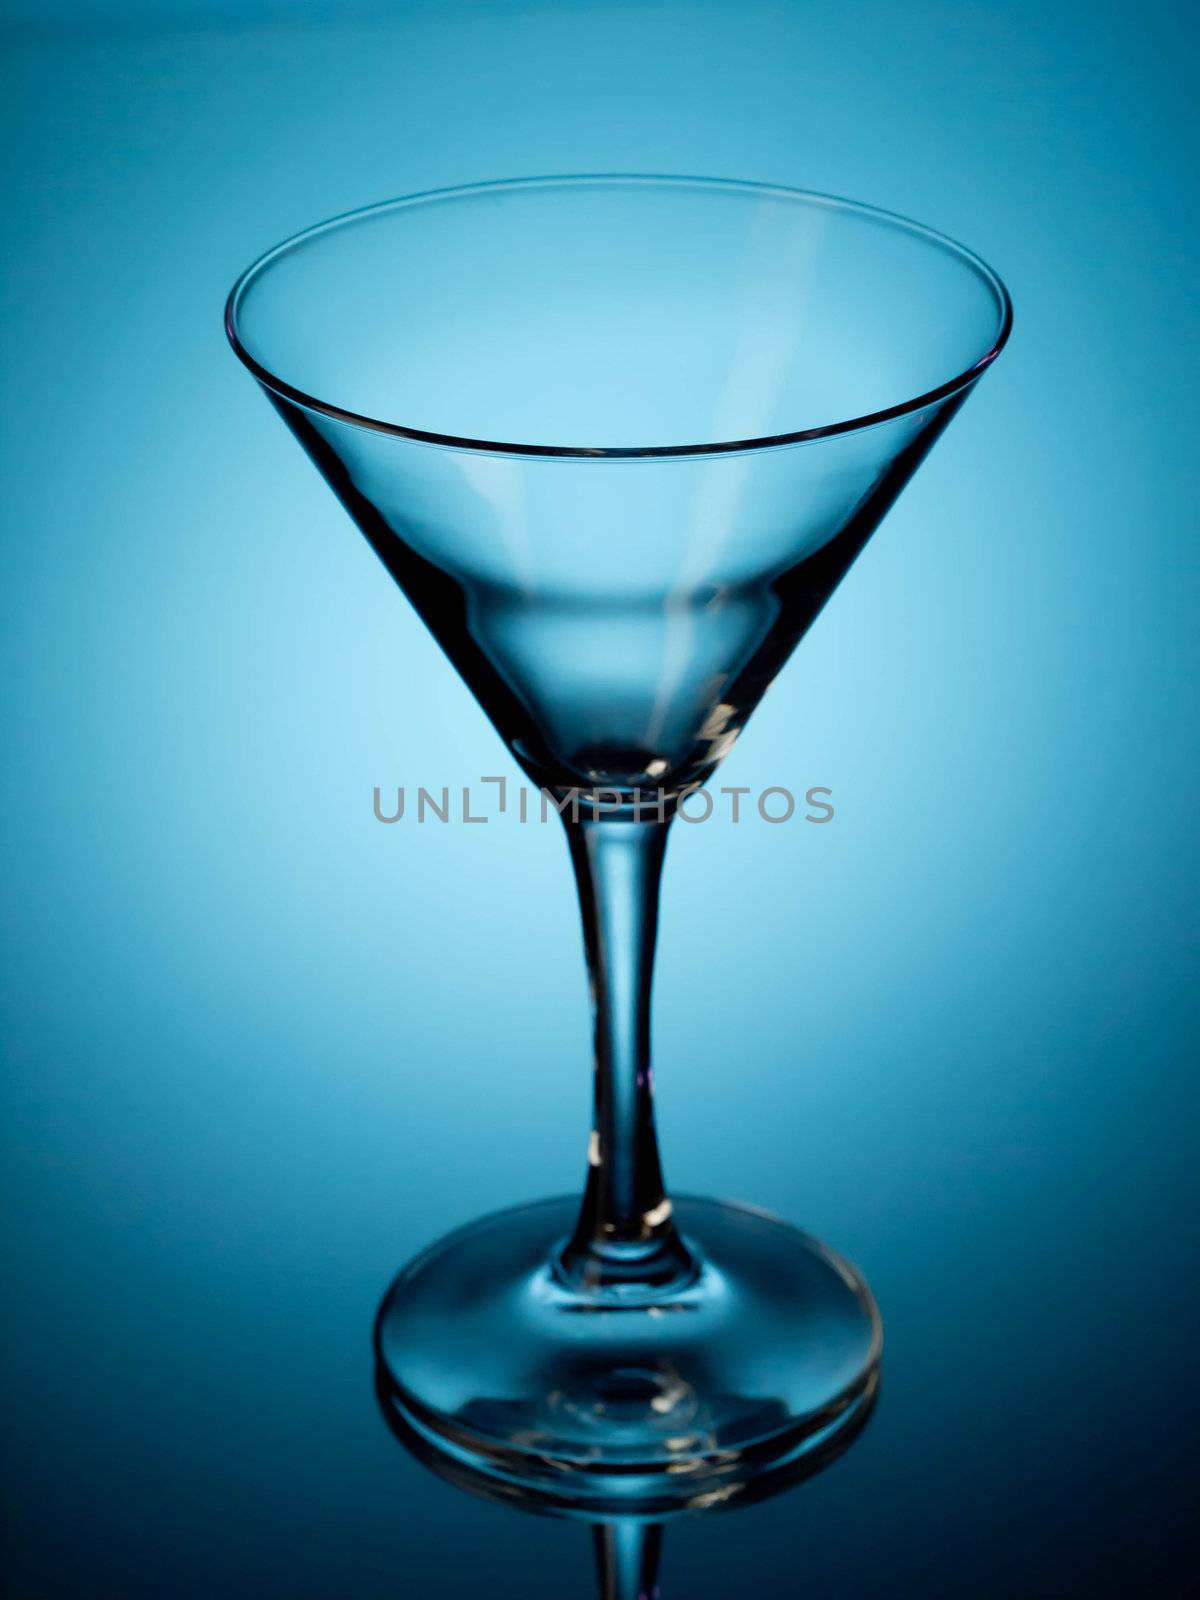 Martini glass by Alex_L